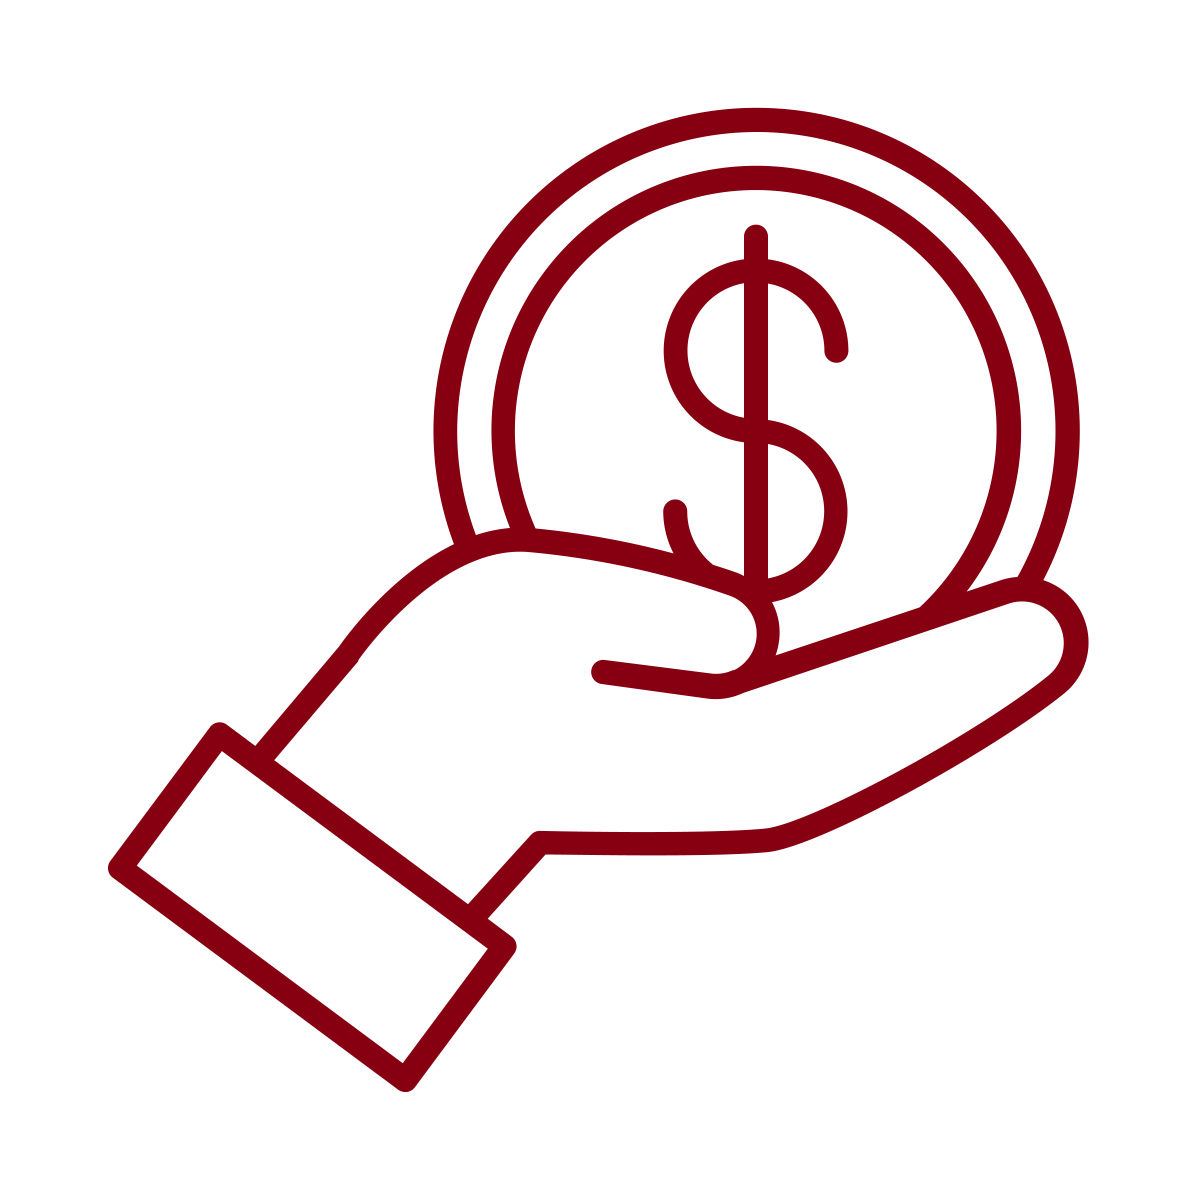 Icon of hand holding money